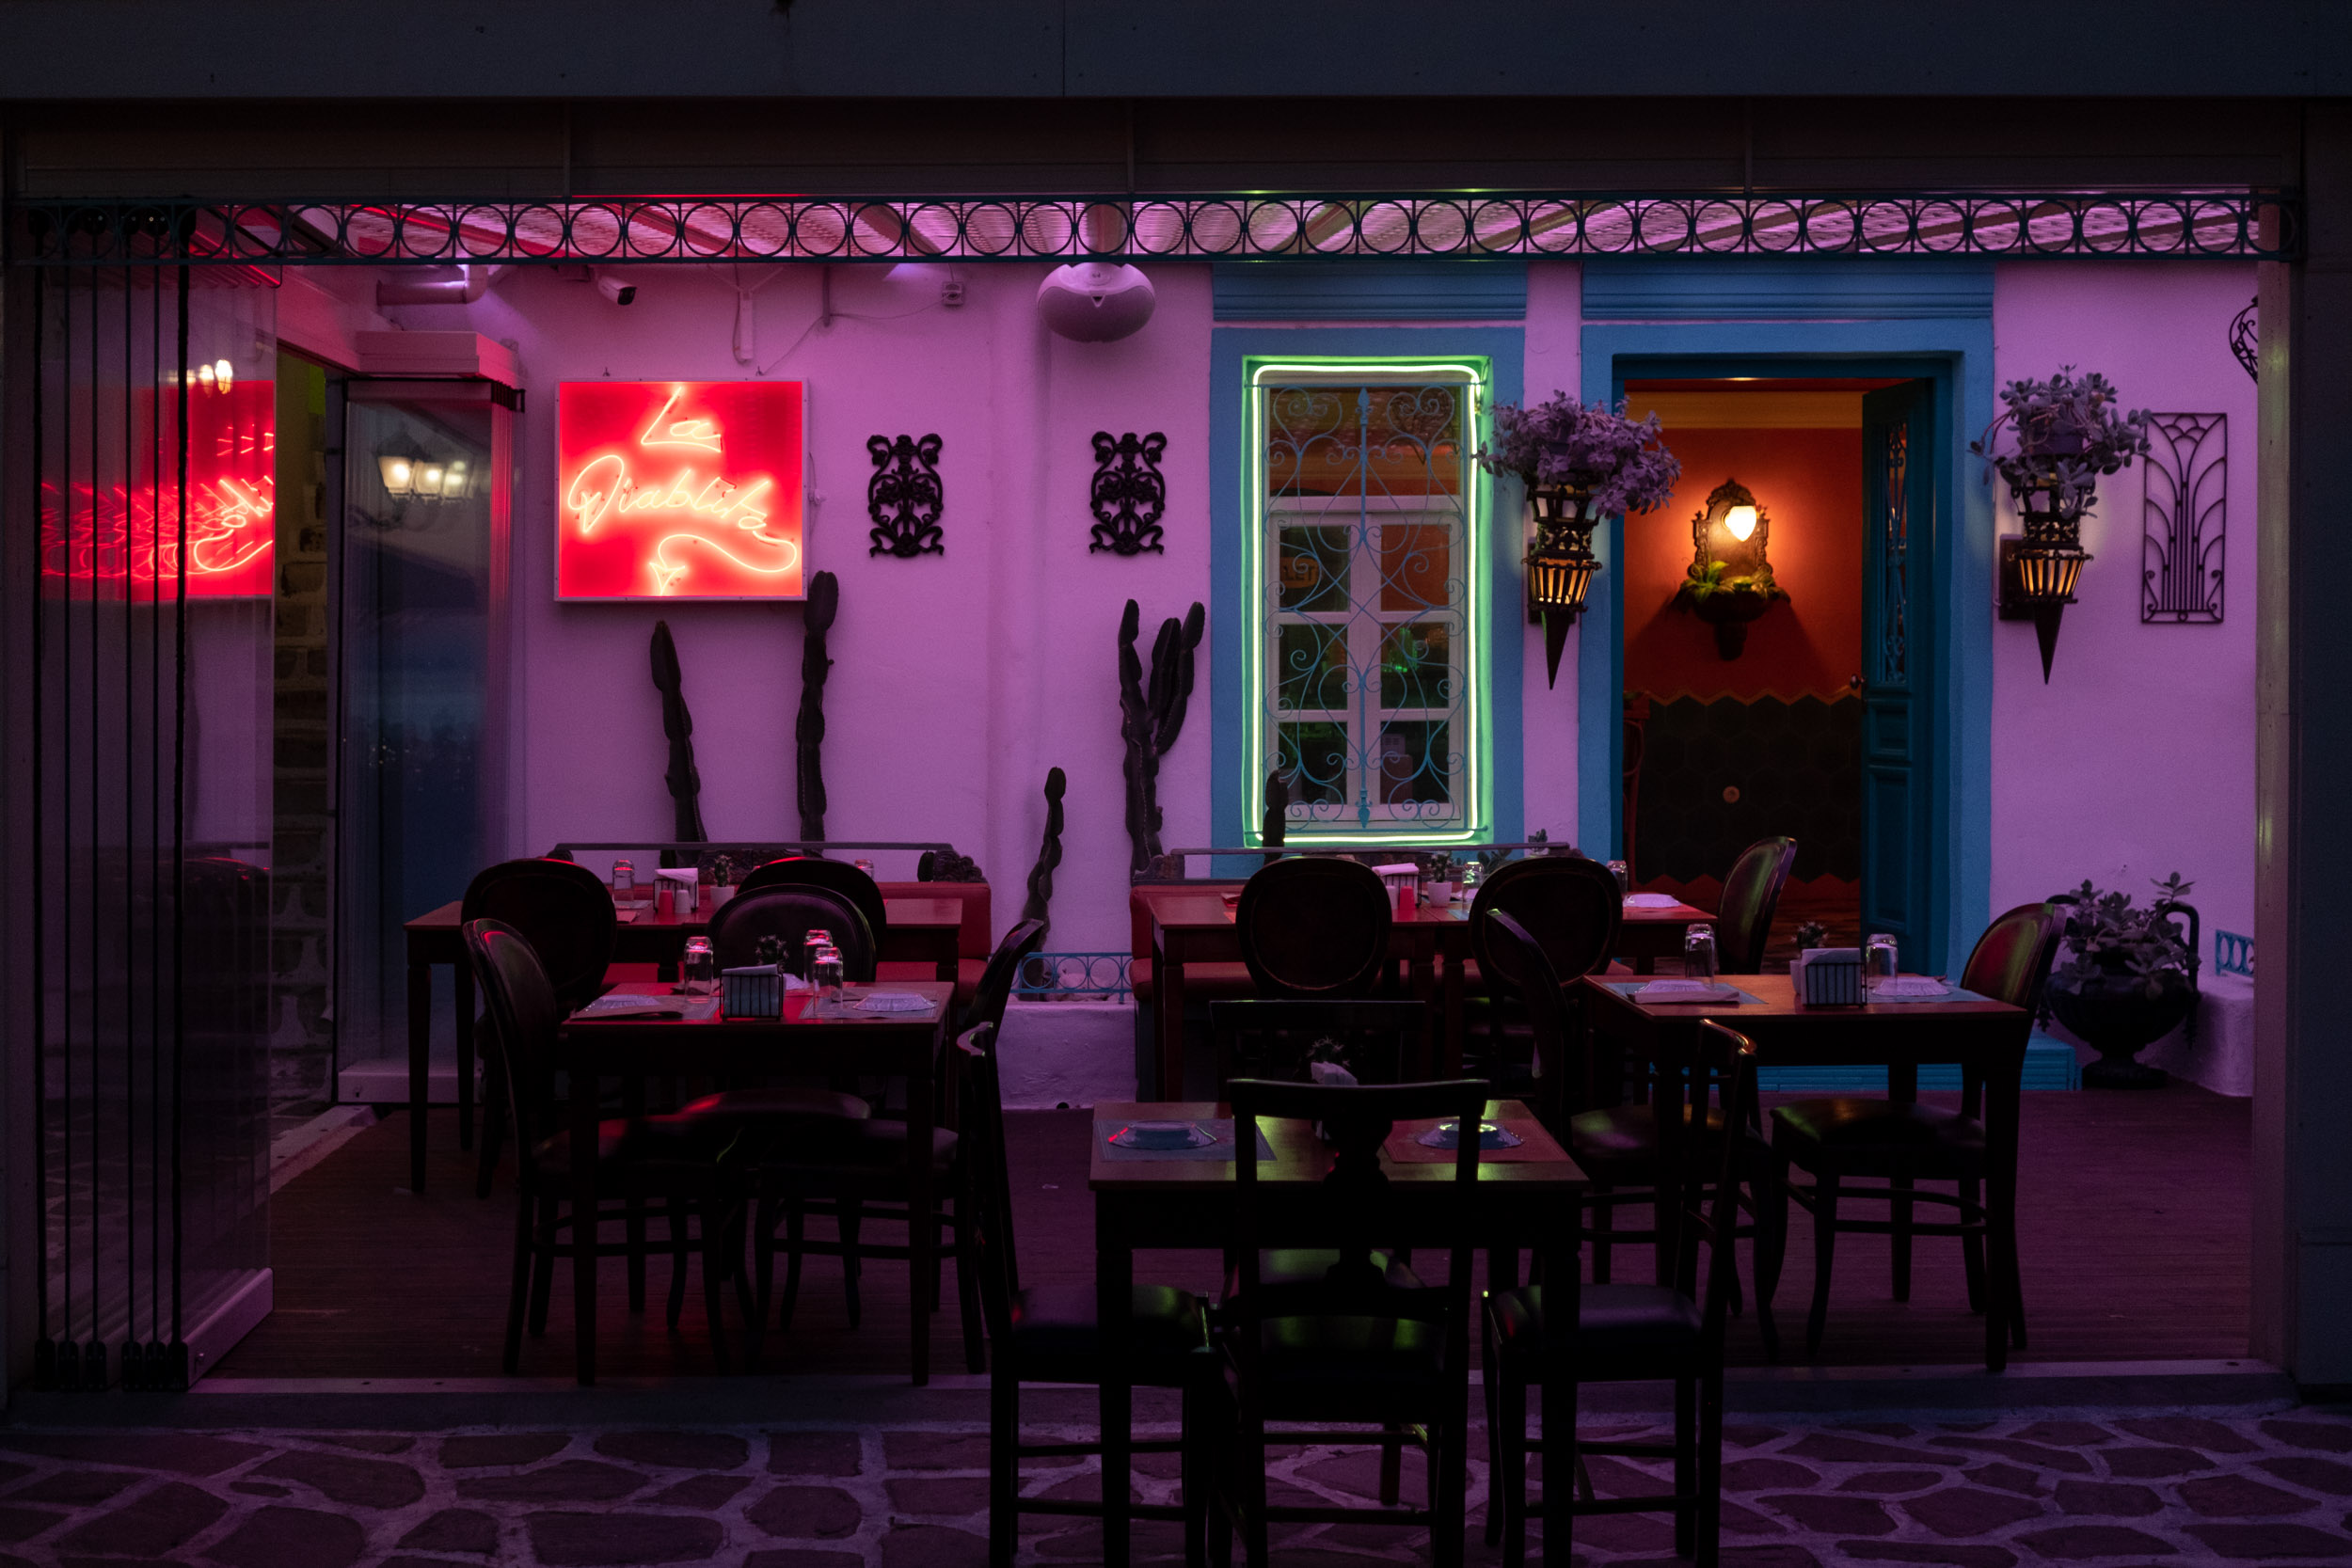 Entrance of "La Diablita", the only Mexican restaurant at the seaside in Parikia, Paros (Greece)